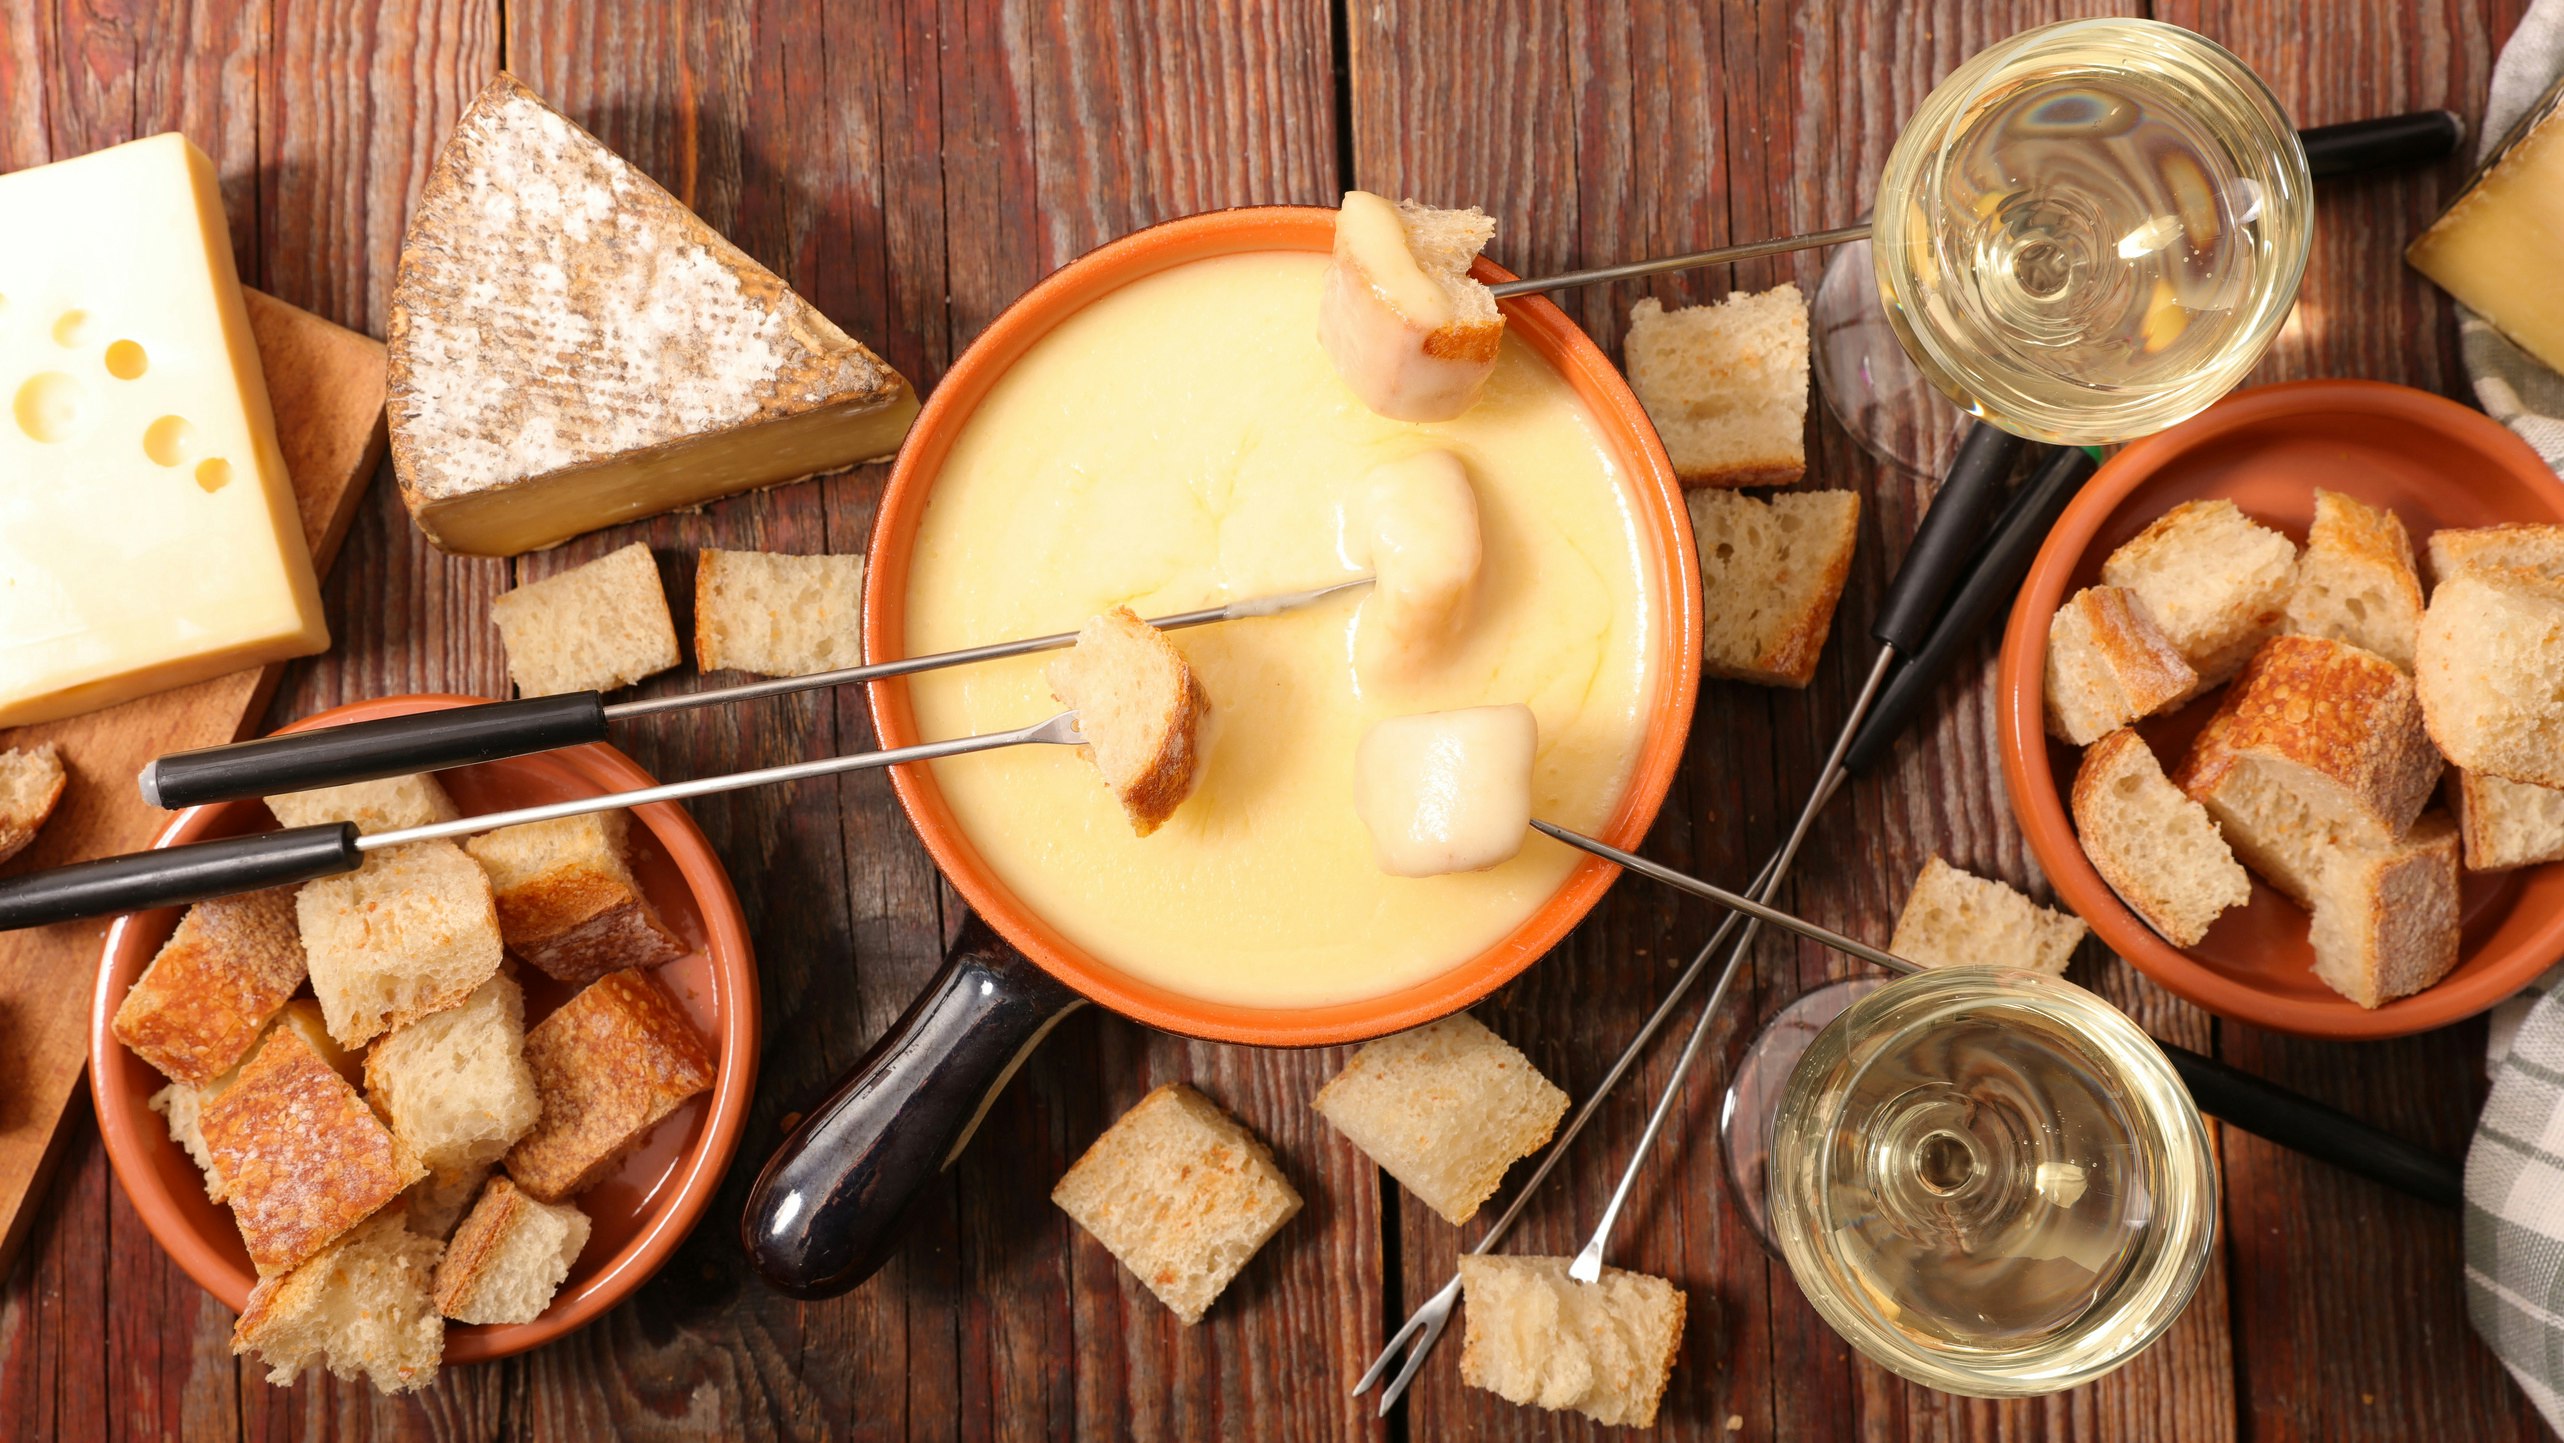 Cheese dinner &bdquo;Zermatt style&ldquo; <br>
for two